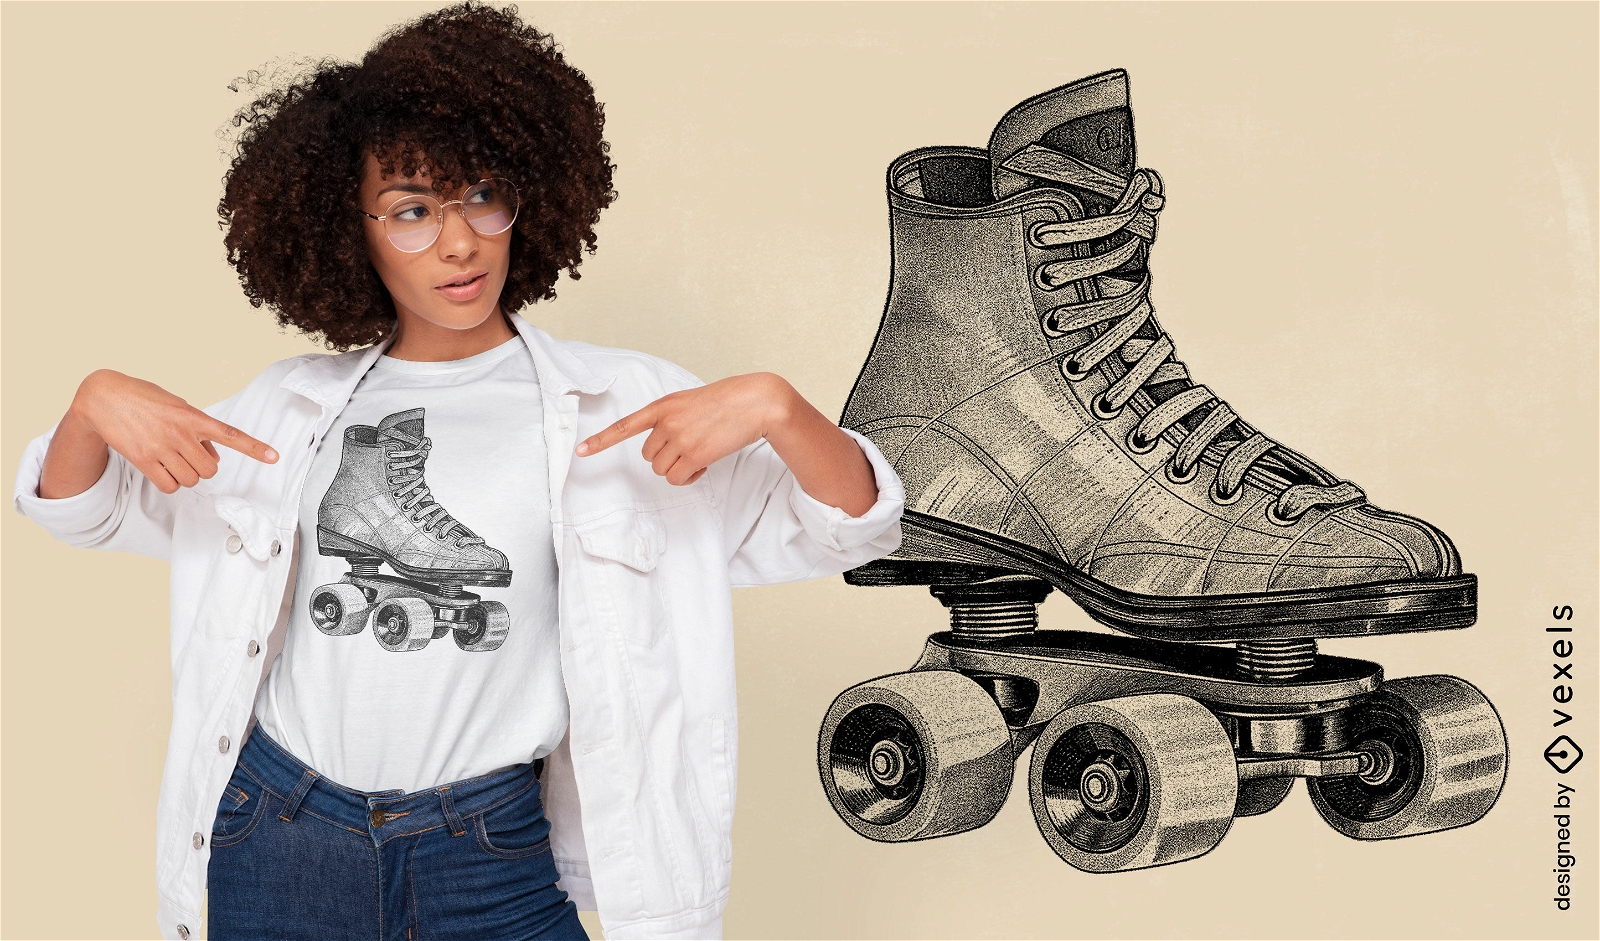 Dise?o de camiseta de pat?n sobre ruedas vintage.